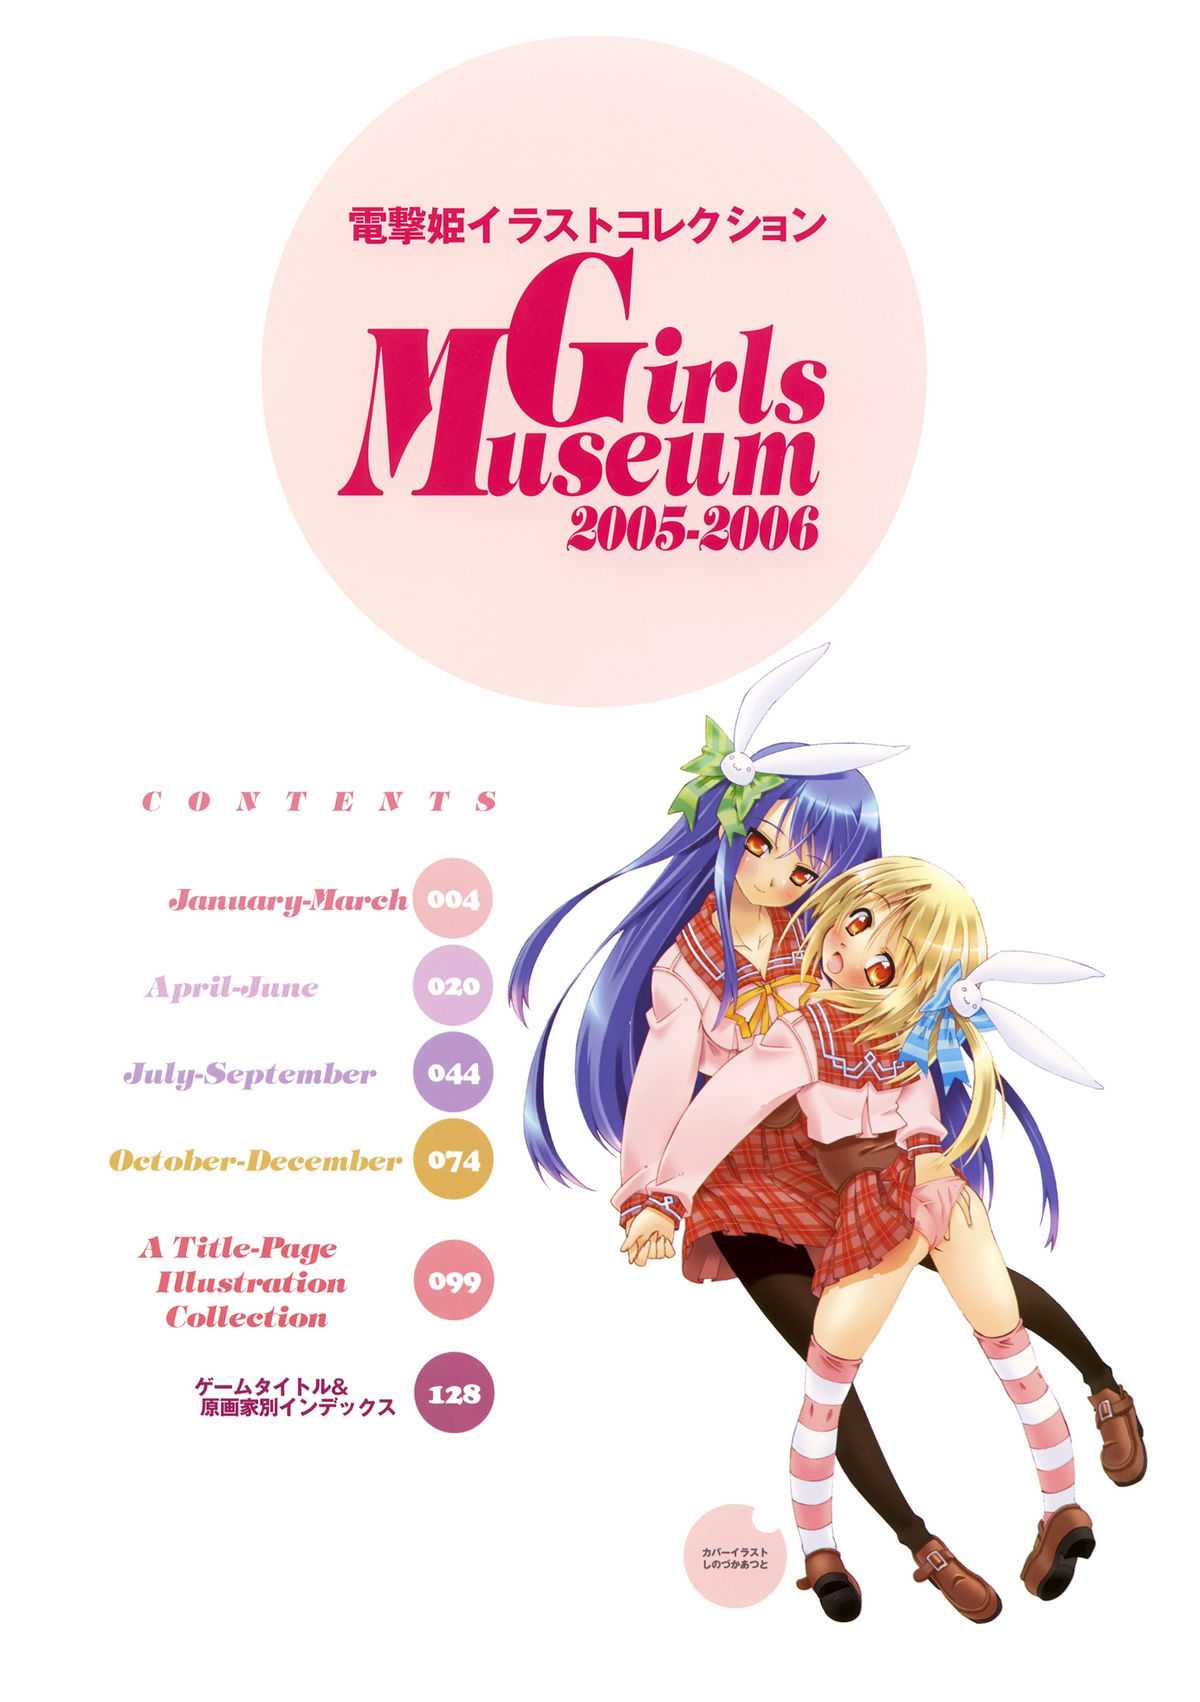 Dengeki-Hime Collection - Girls Museum 2005-2006 電撃姫イラストコレクション Girls Museum 2005-2006